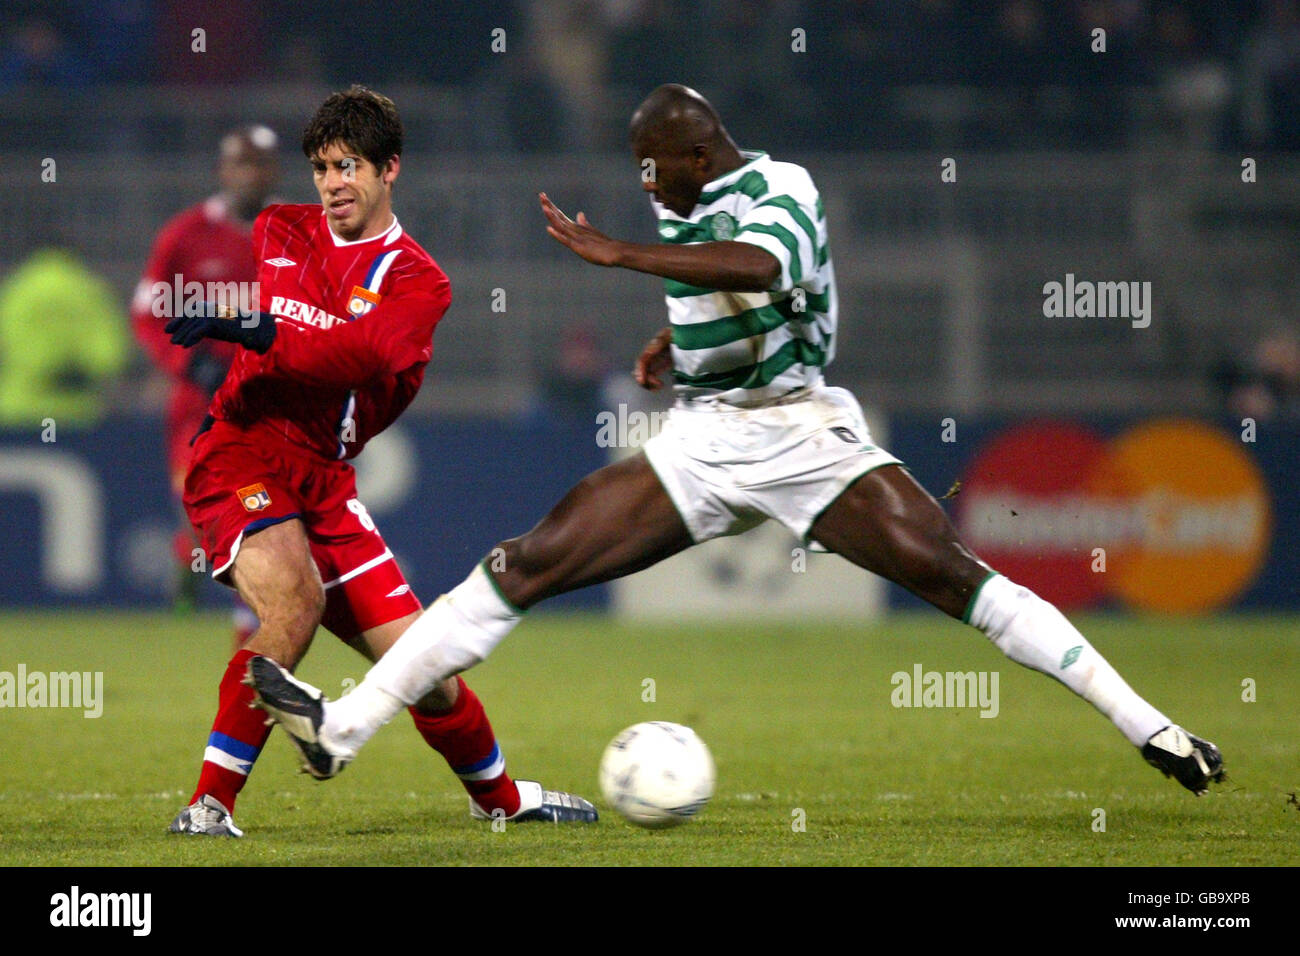 Olympique Lyonnais' Juninho Pernambucano and Celtic's Bobo Balde (r) battle for the ball Stock Photo